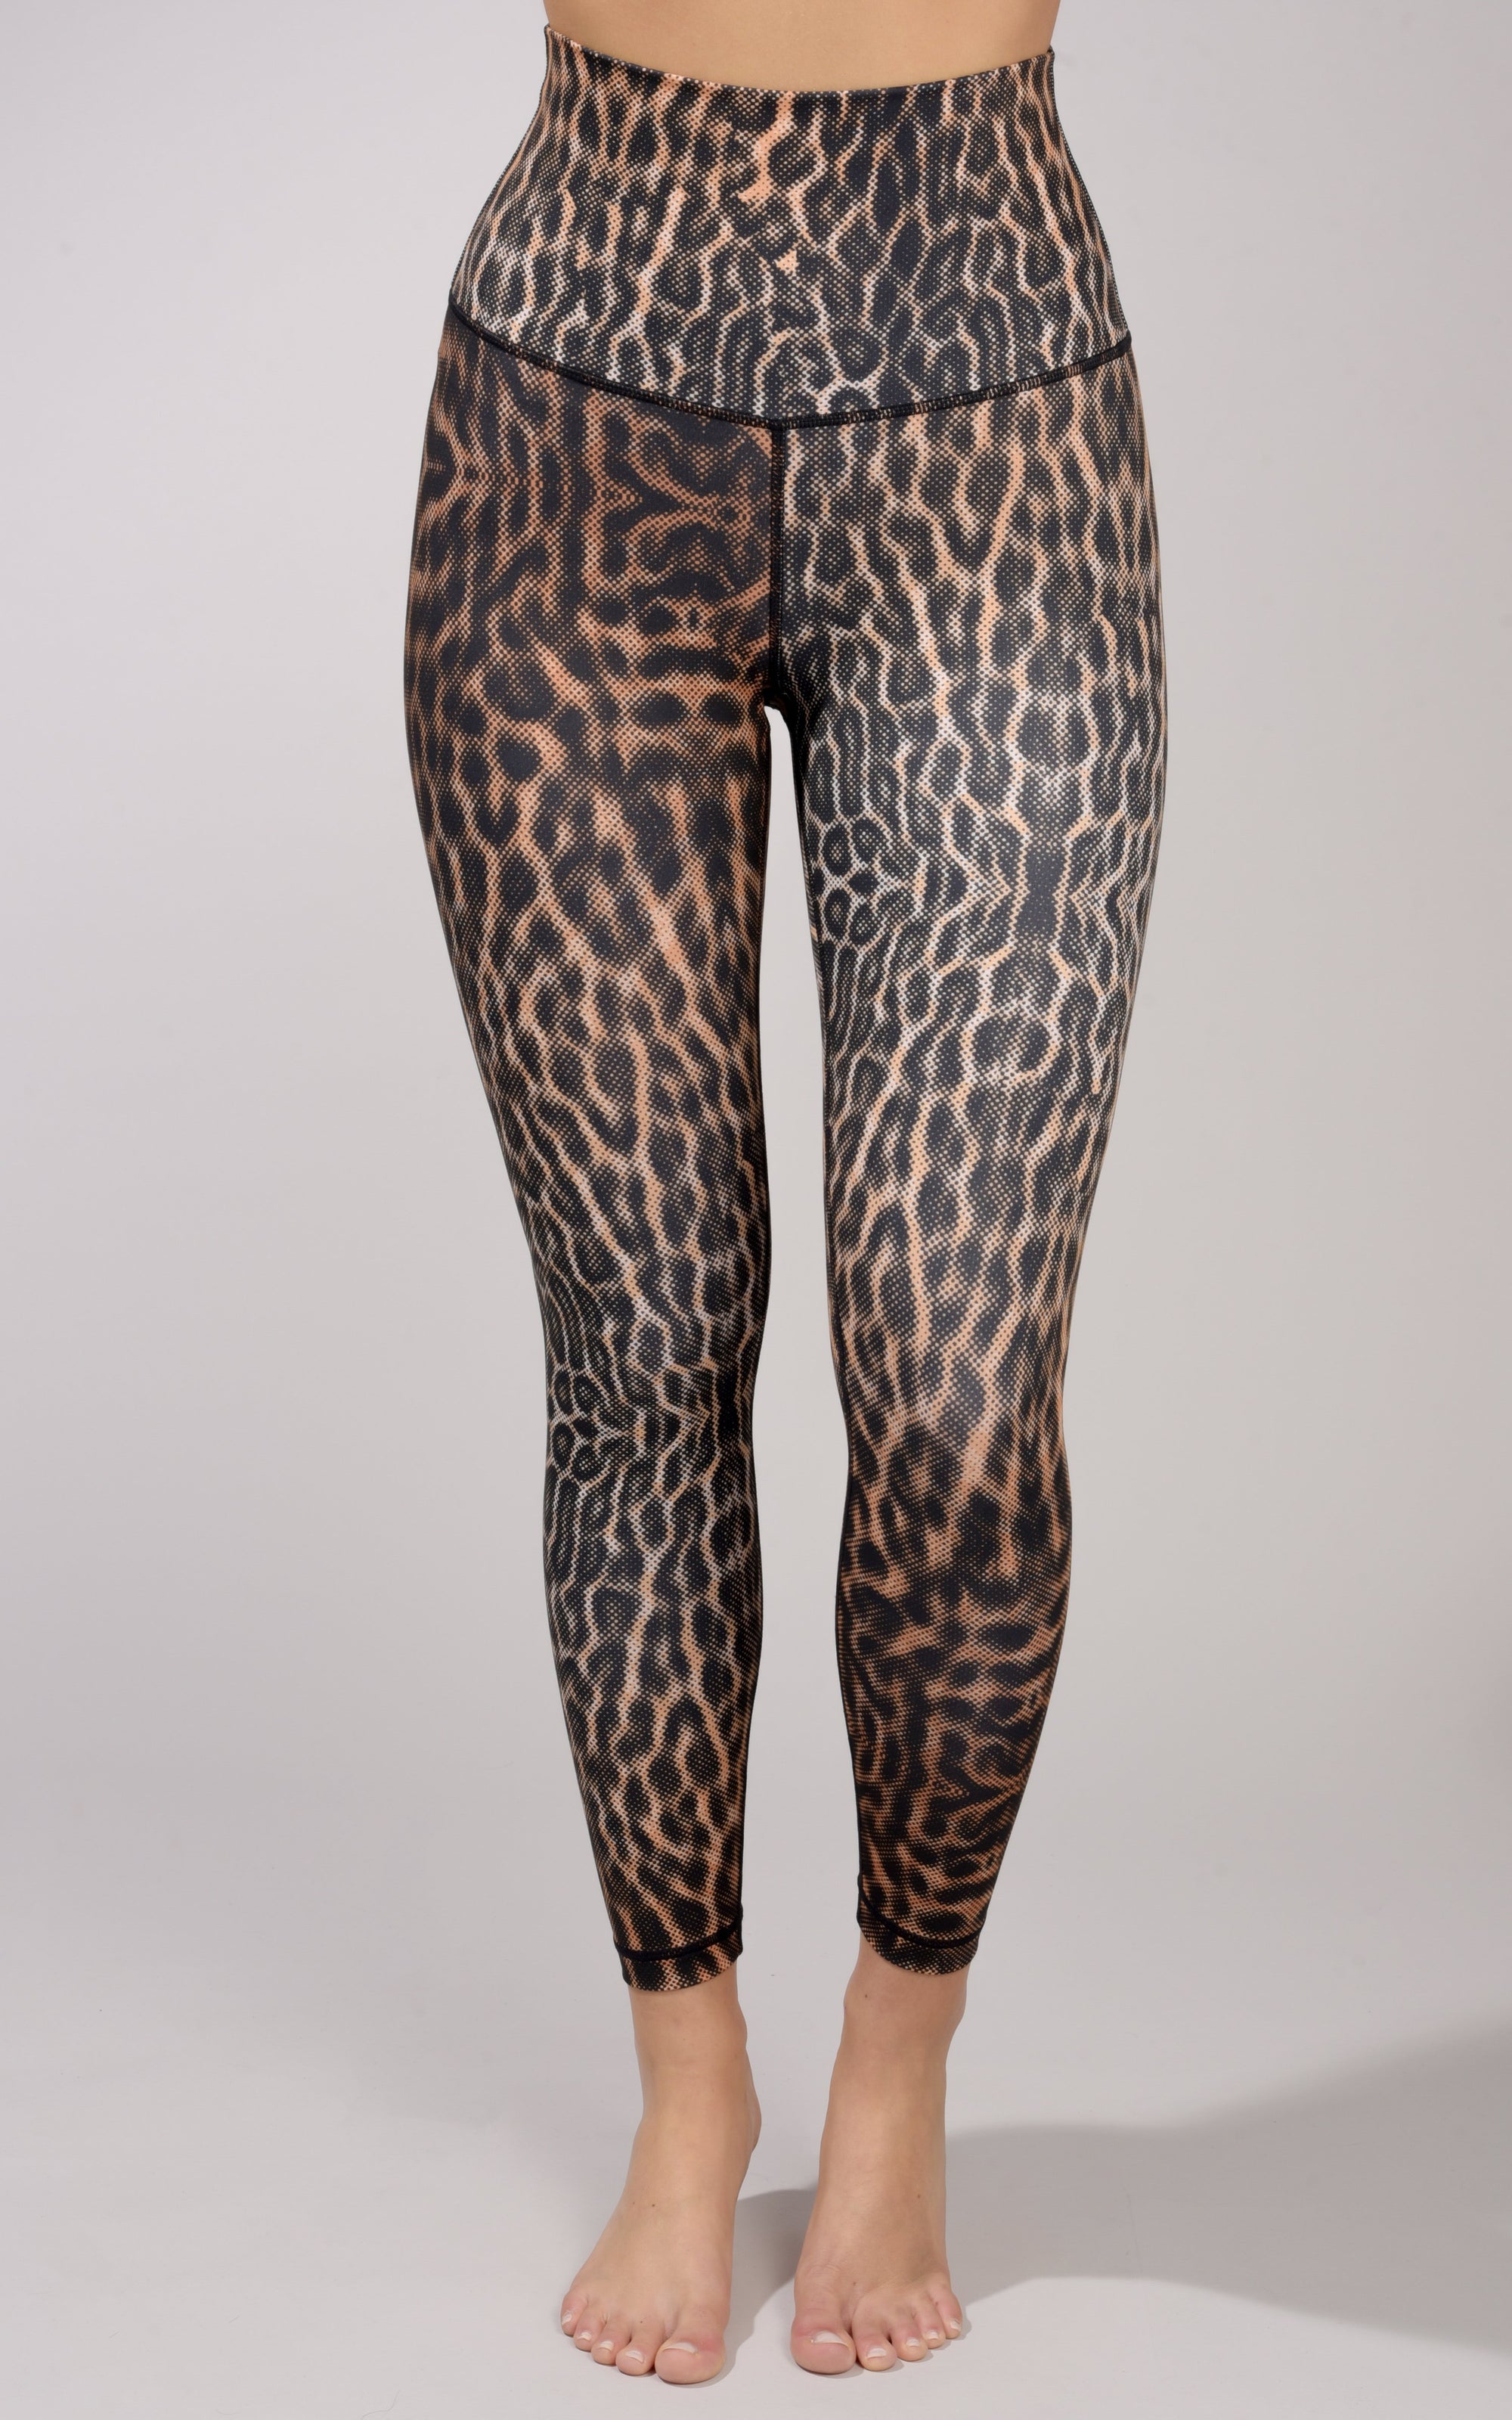 EVOLUTION & CREATION Cheetah Print High Waist Women's Medium Leggings Yoga  Pants